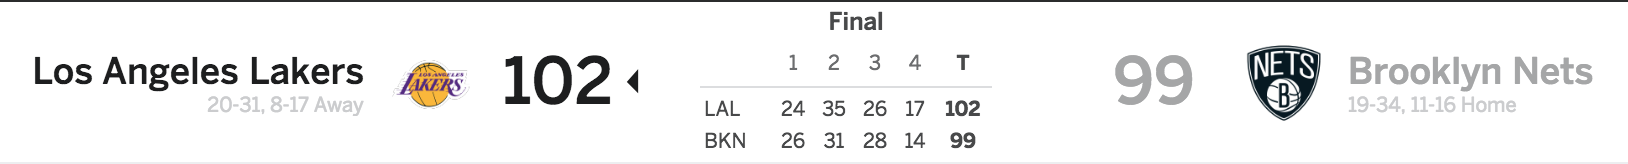 Brooklyn Nets vs Los Angles Lakers 2-2-18 Score